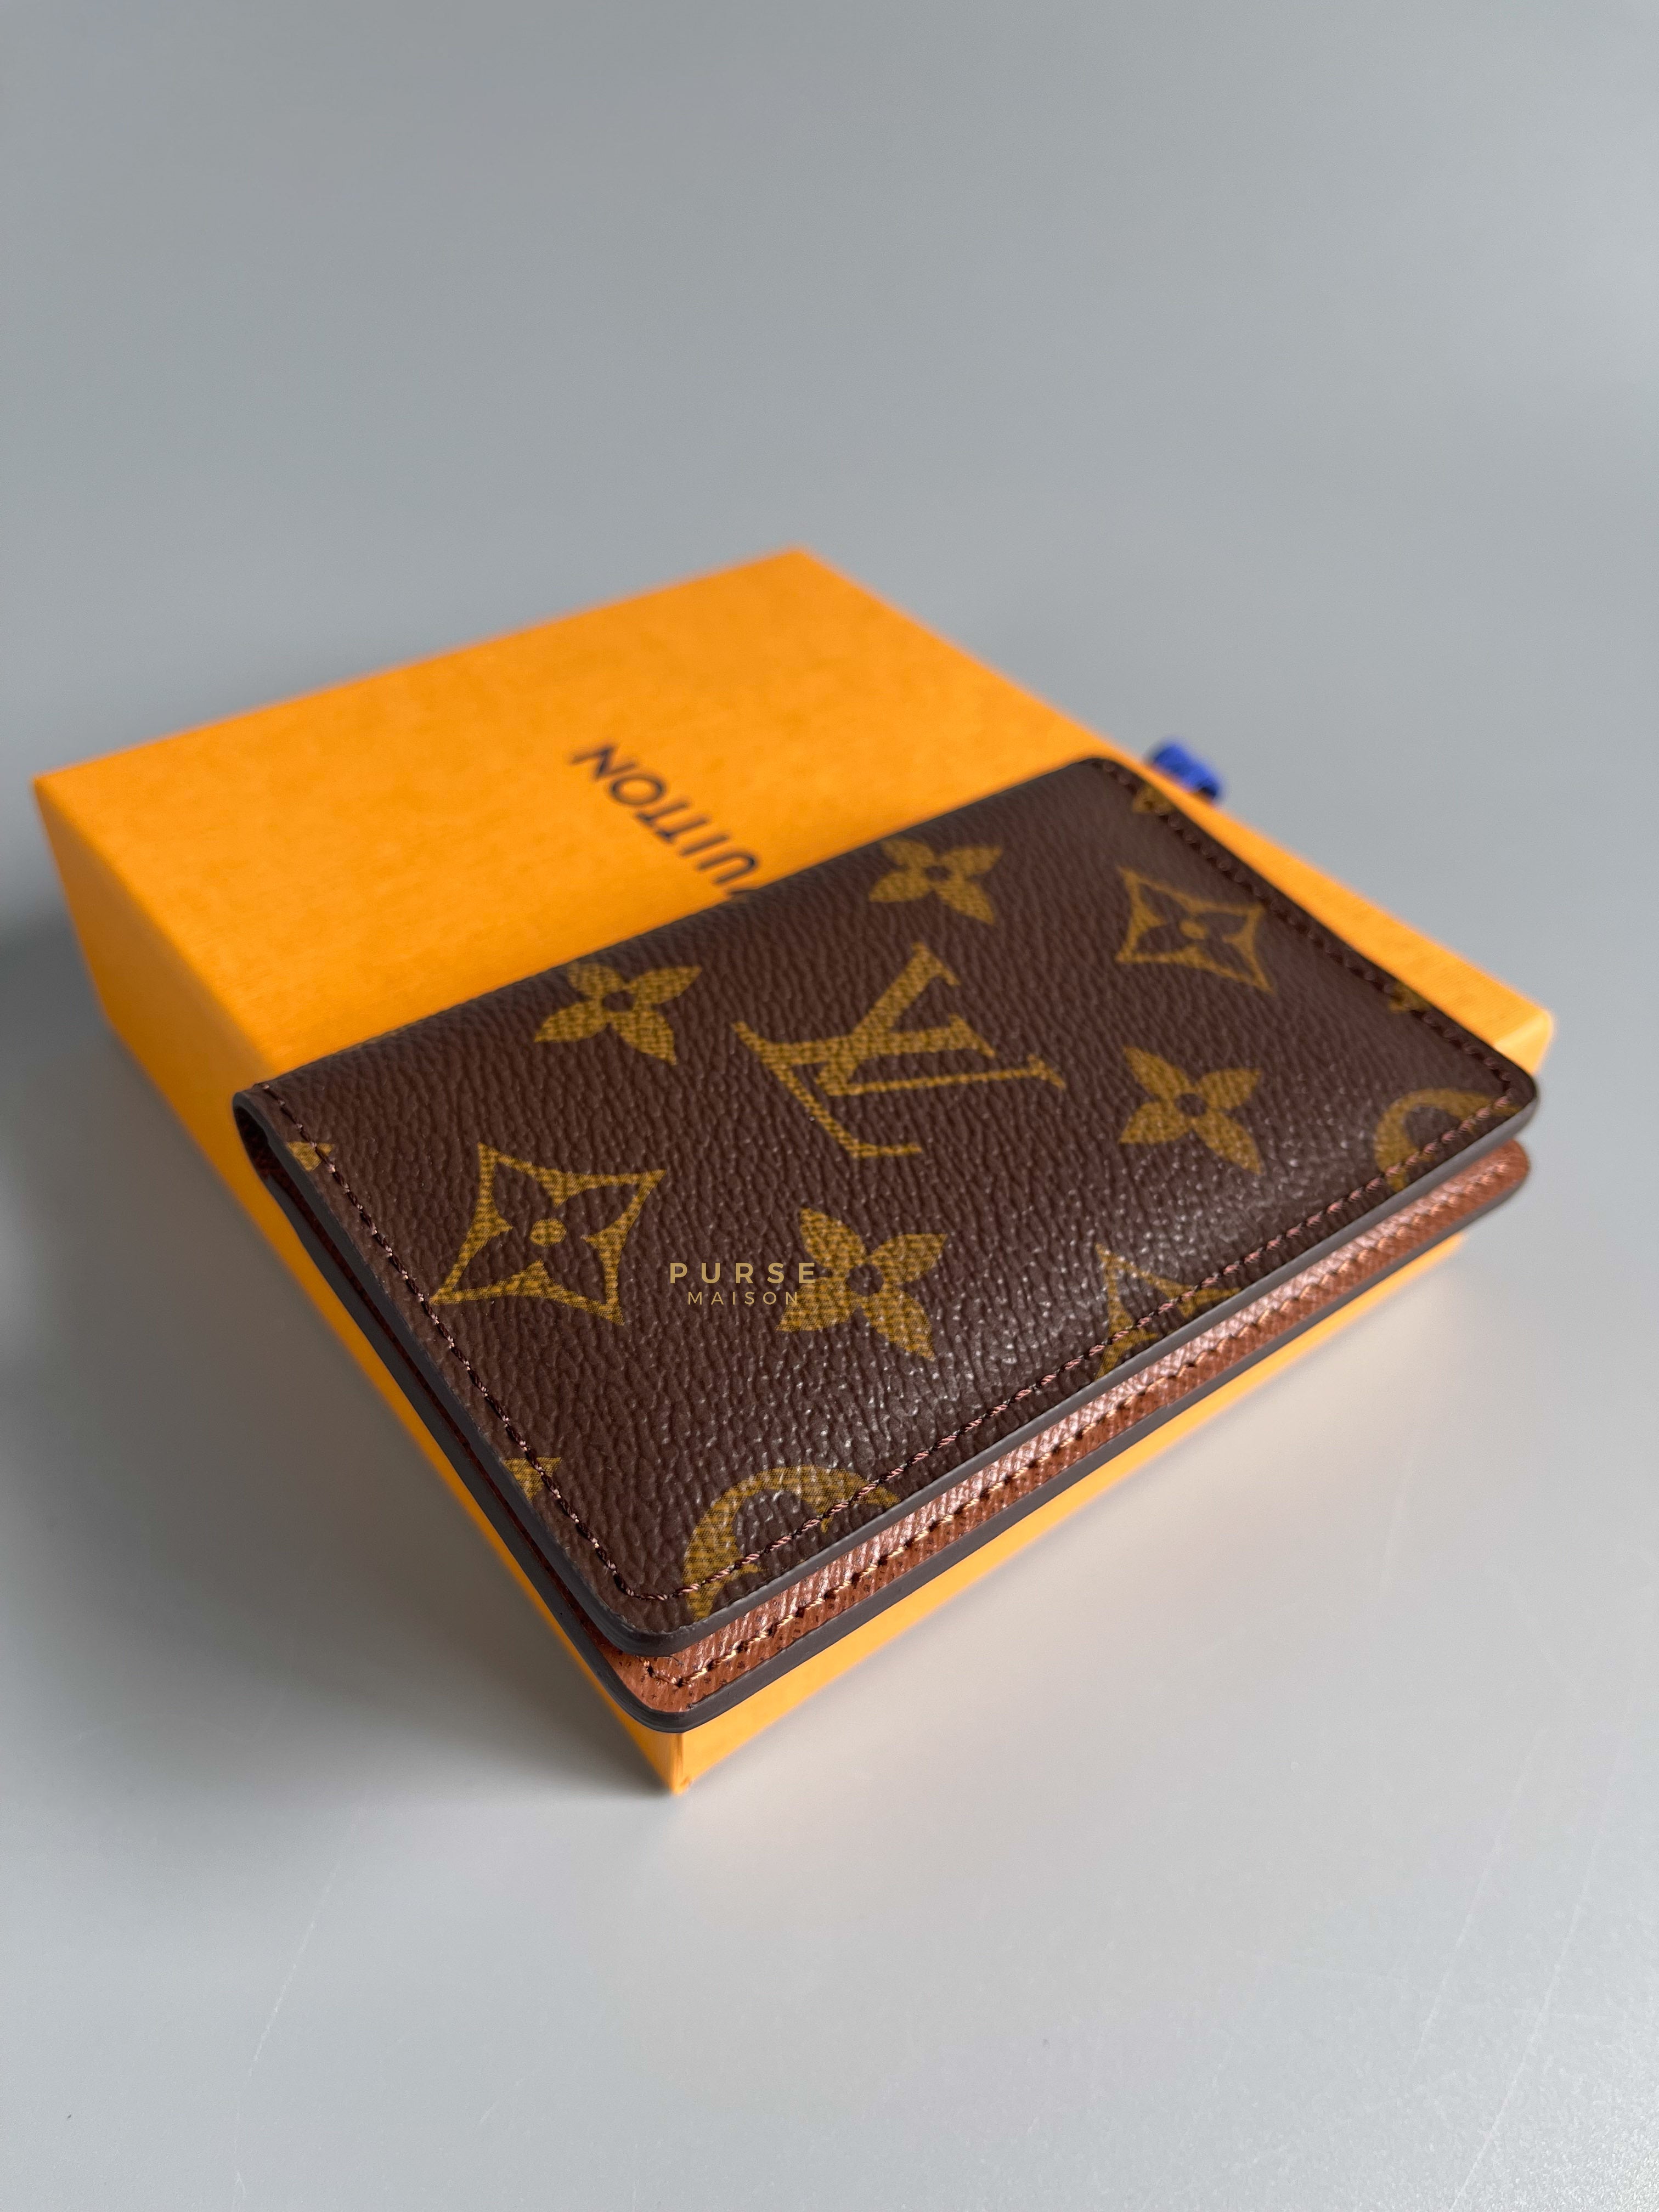 Louis Vuitton Pocket Organizer/Cardholder in Monogram Canvas (Microchip) | Purse Maison Luxury Bags Shop